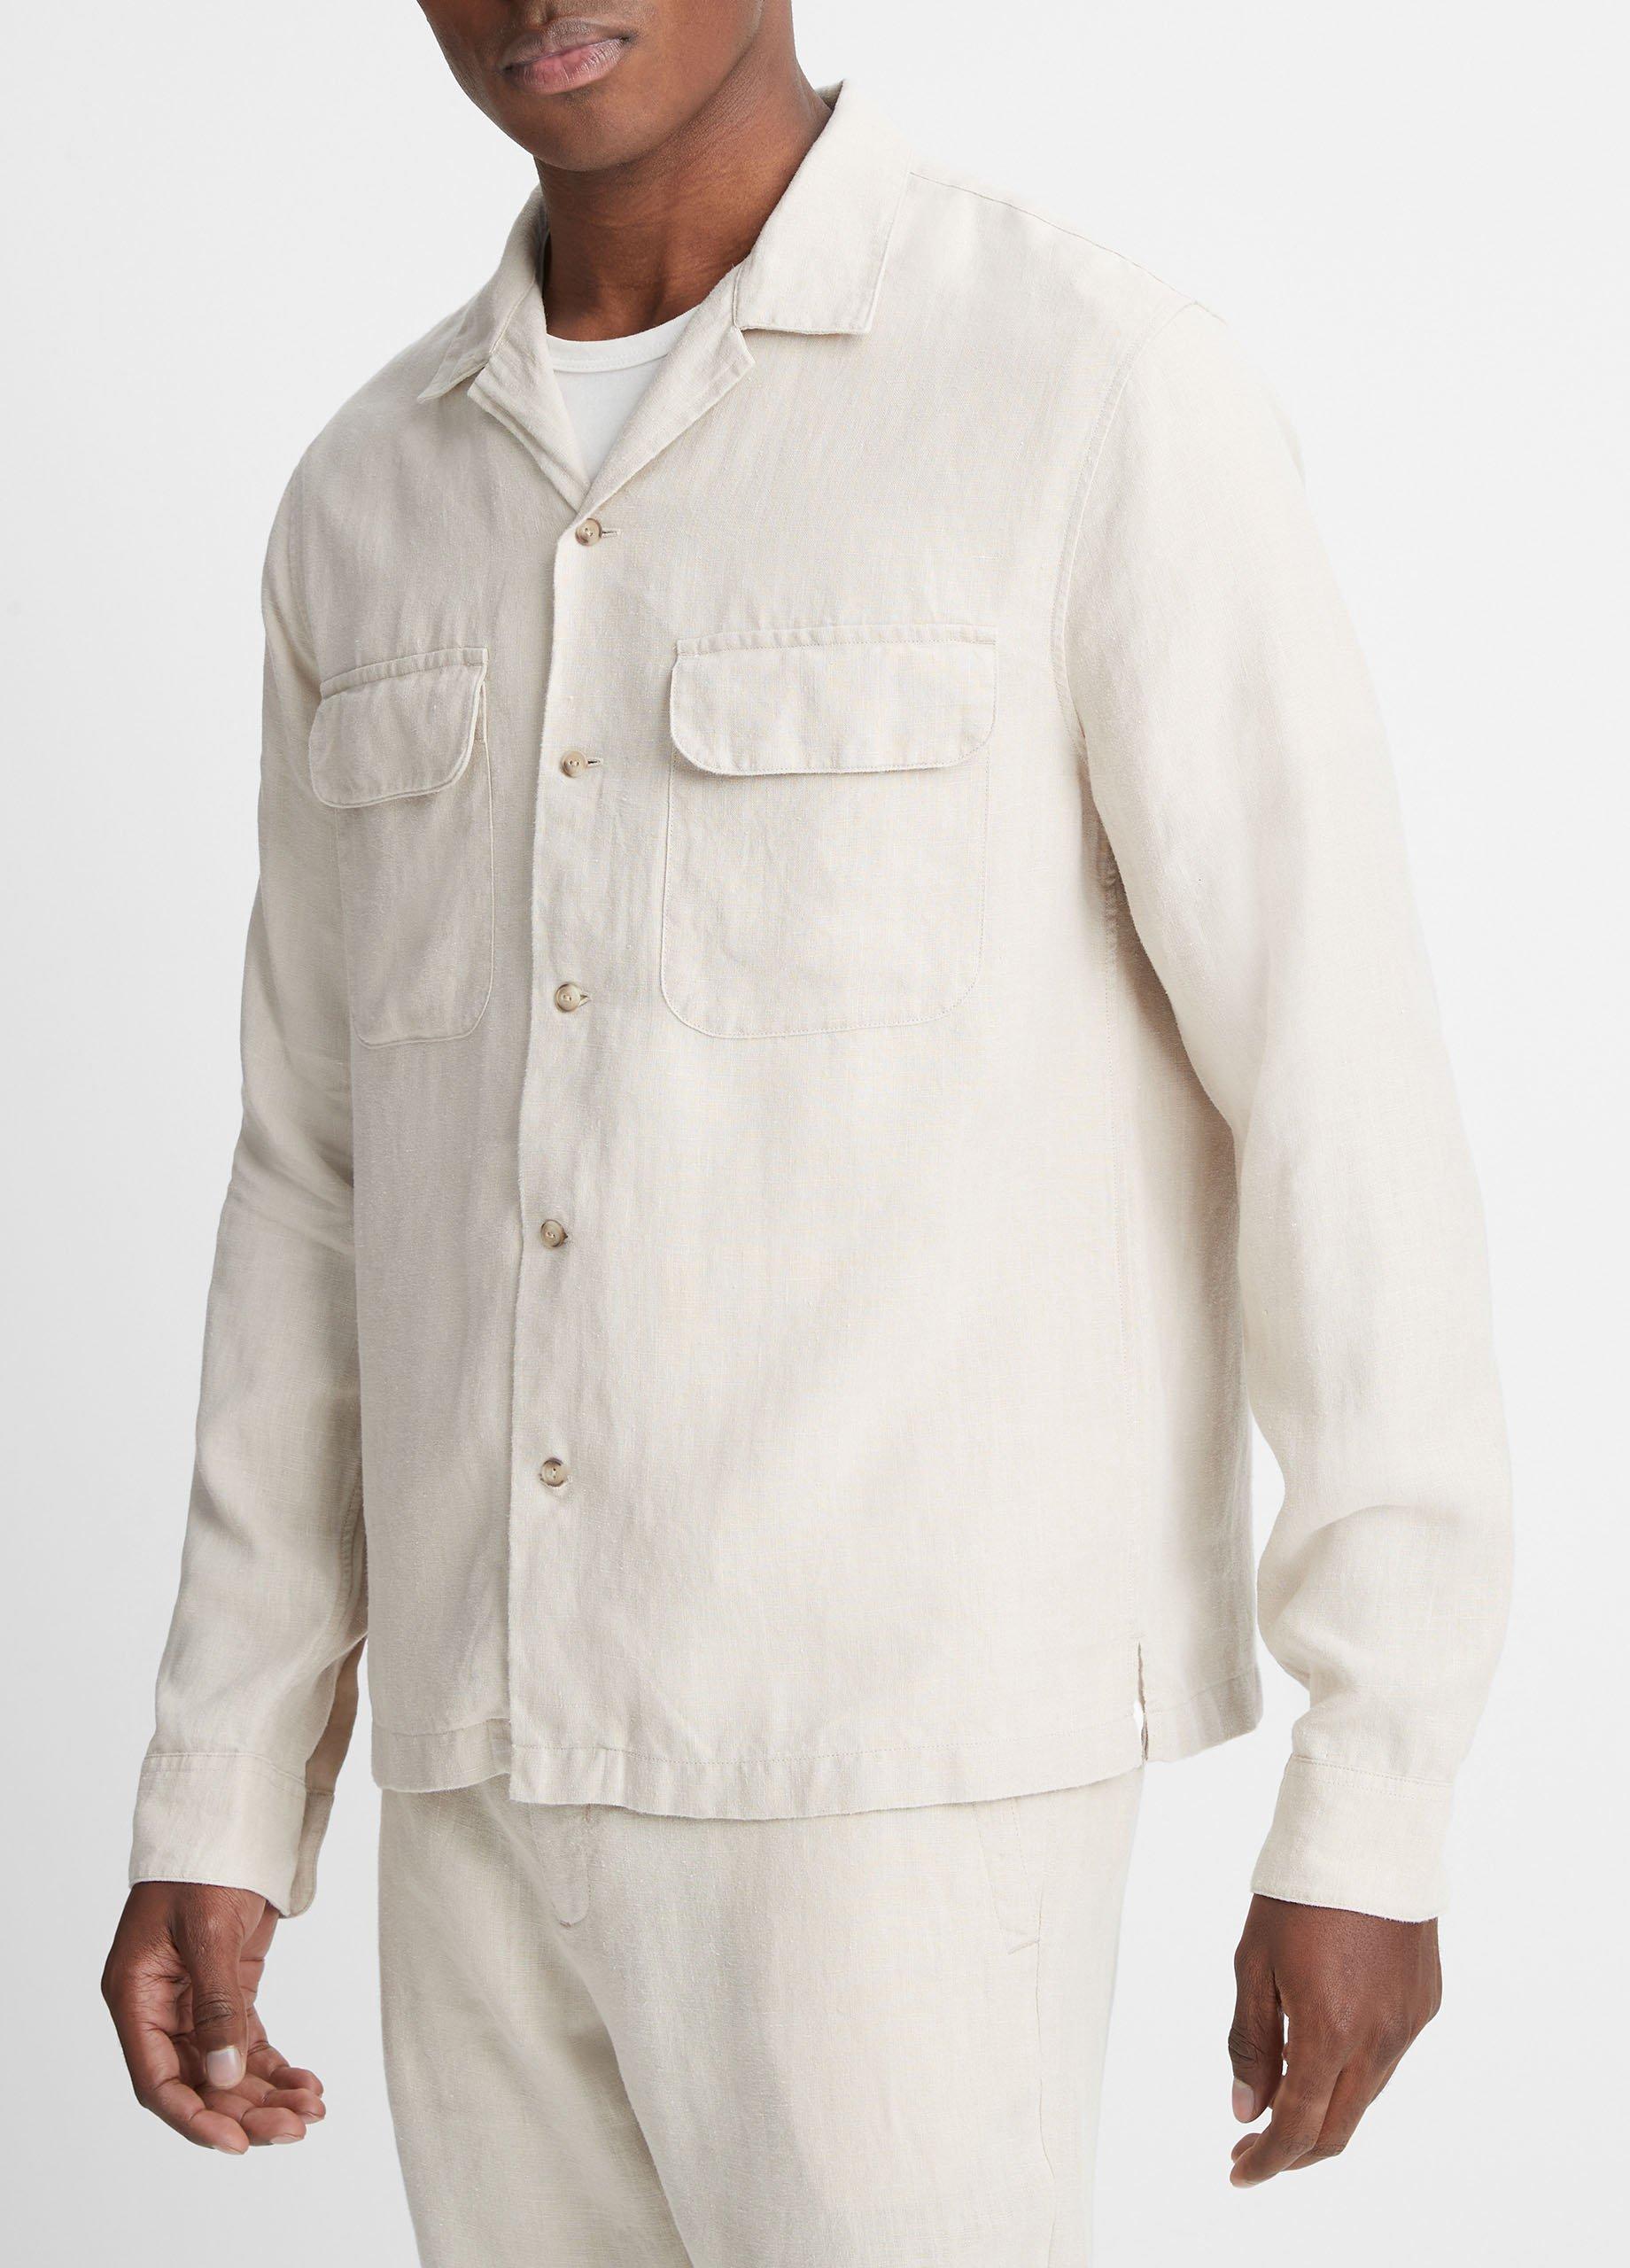 Long Sleeve Camp Collar Shirt - White Eyelet – SHADES OF GREY BY